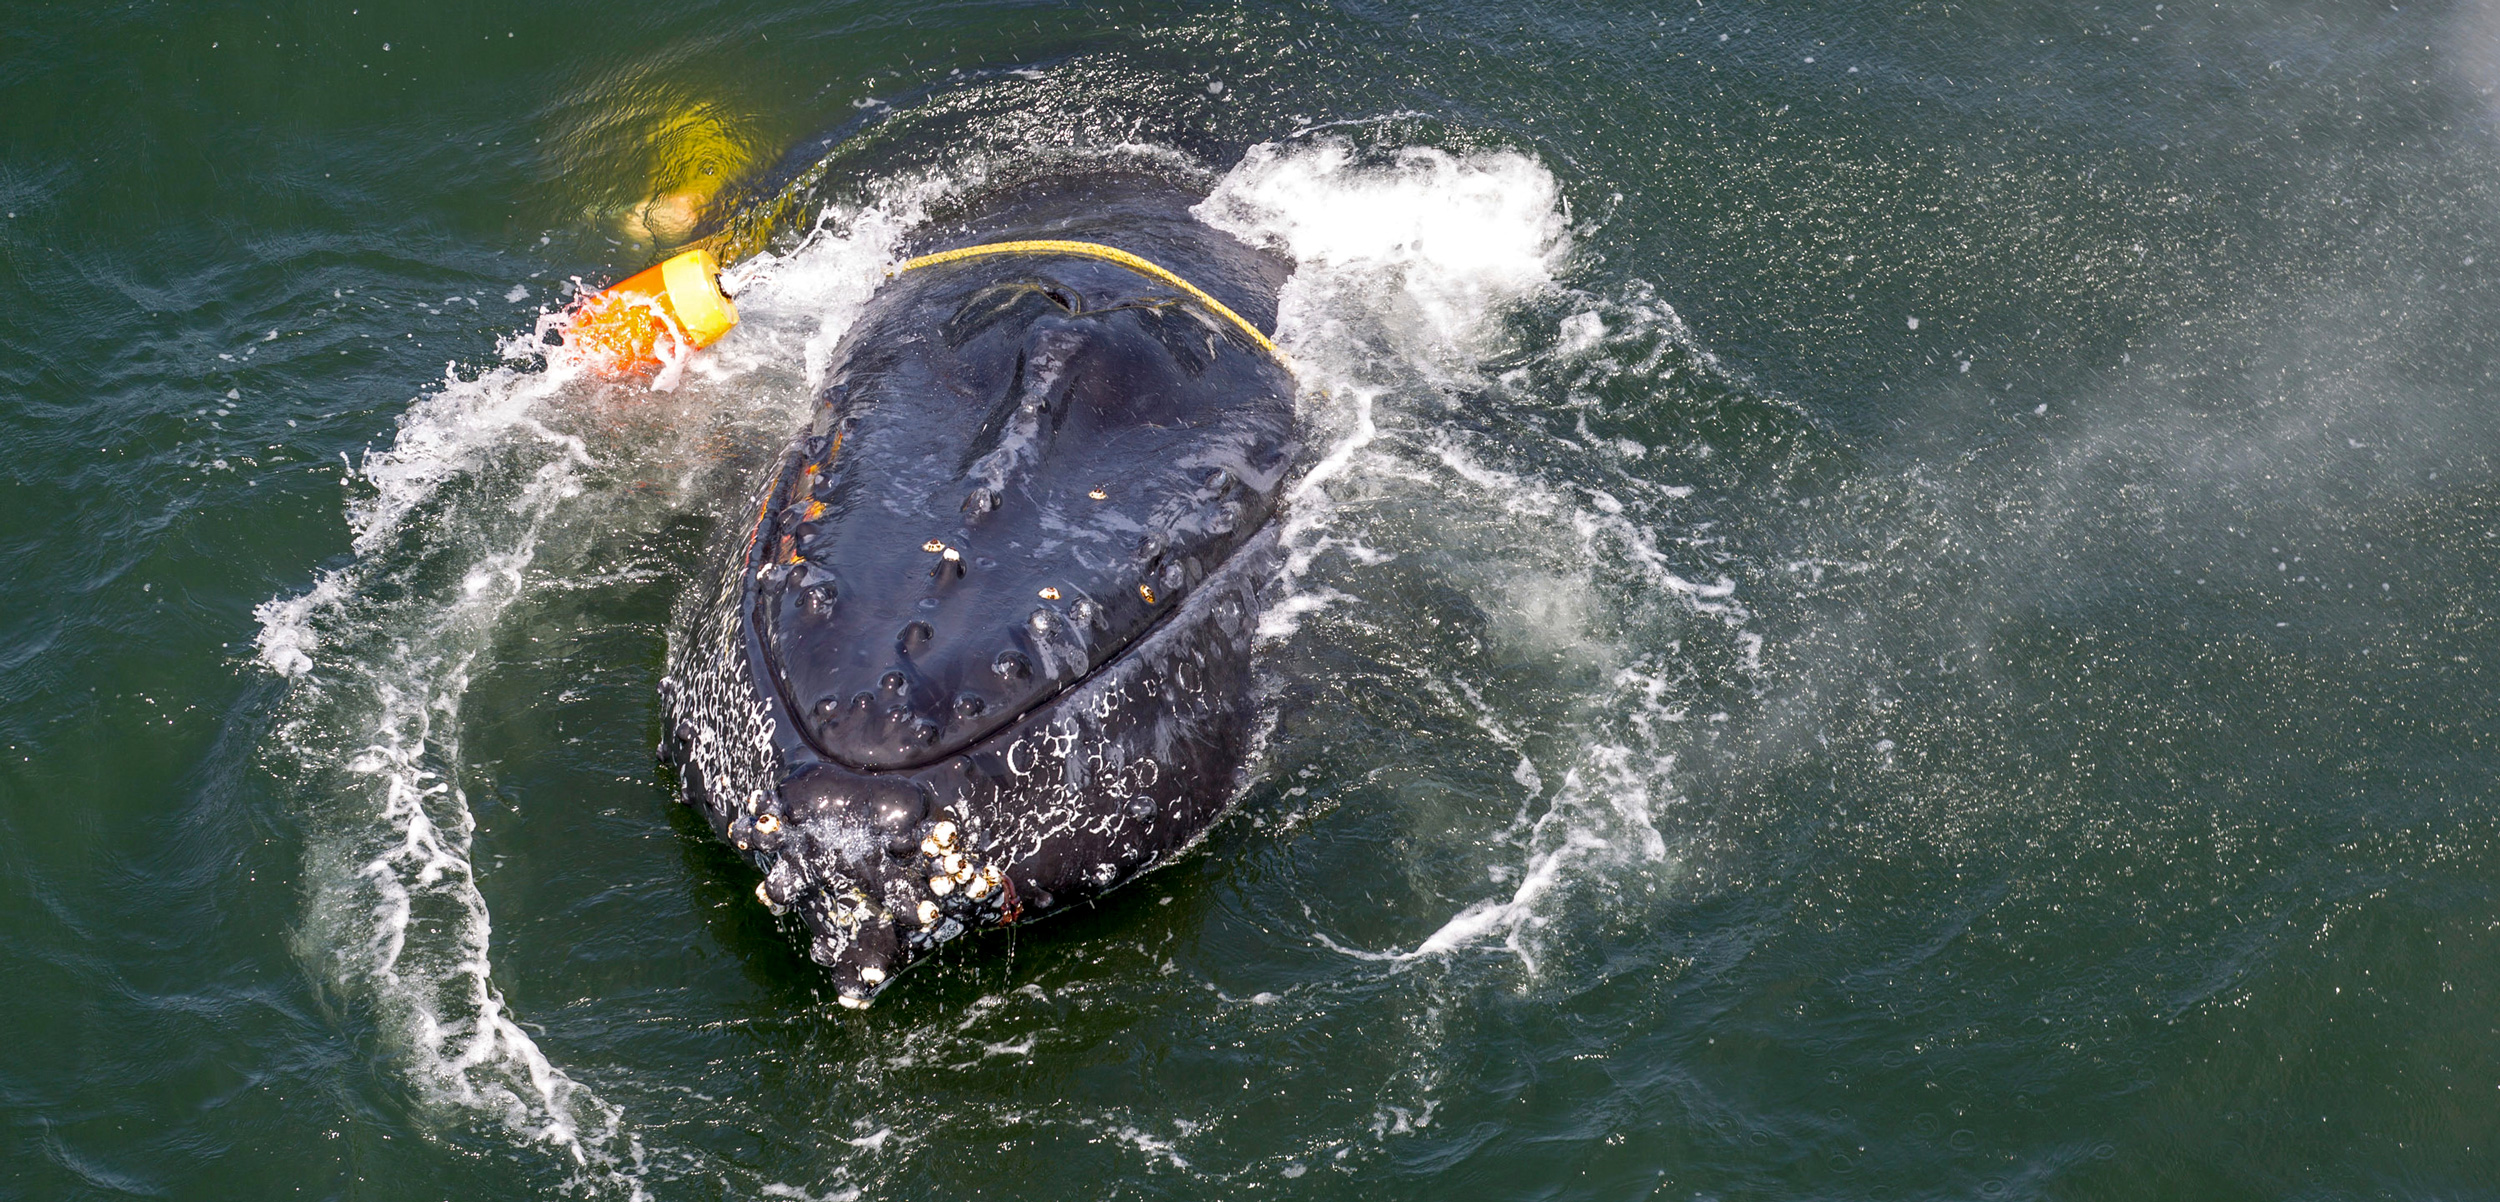 humpback whale entangled in fishing gear